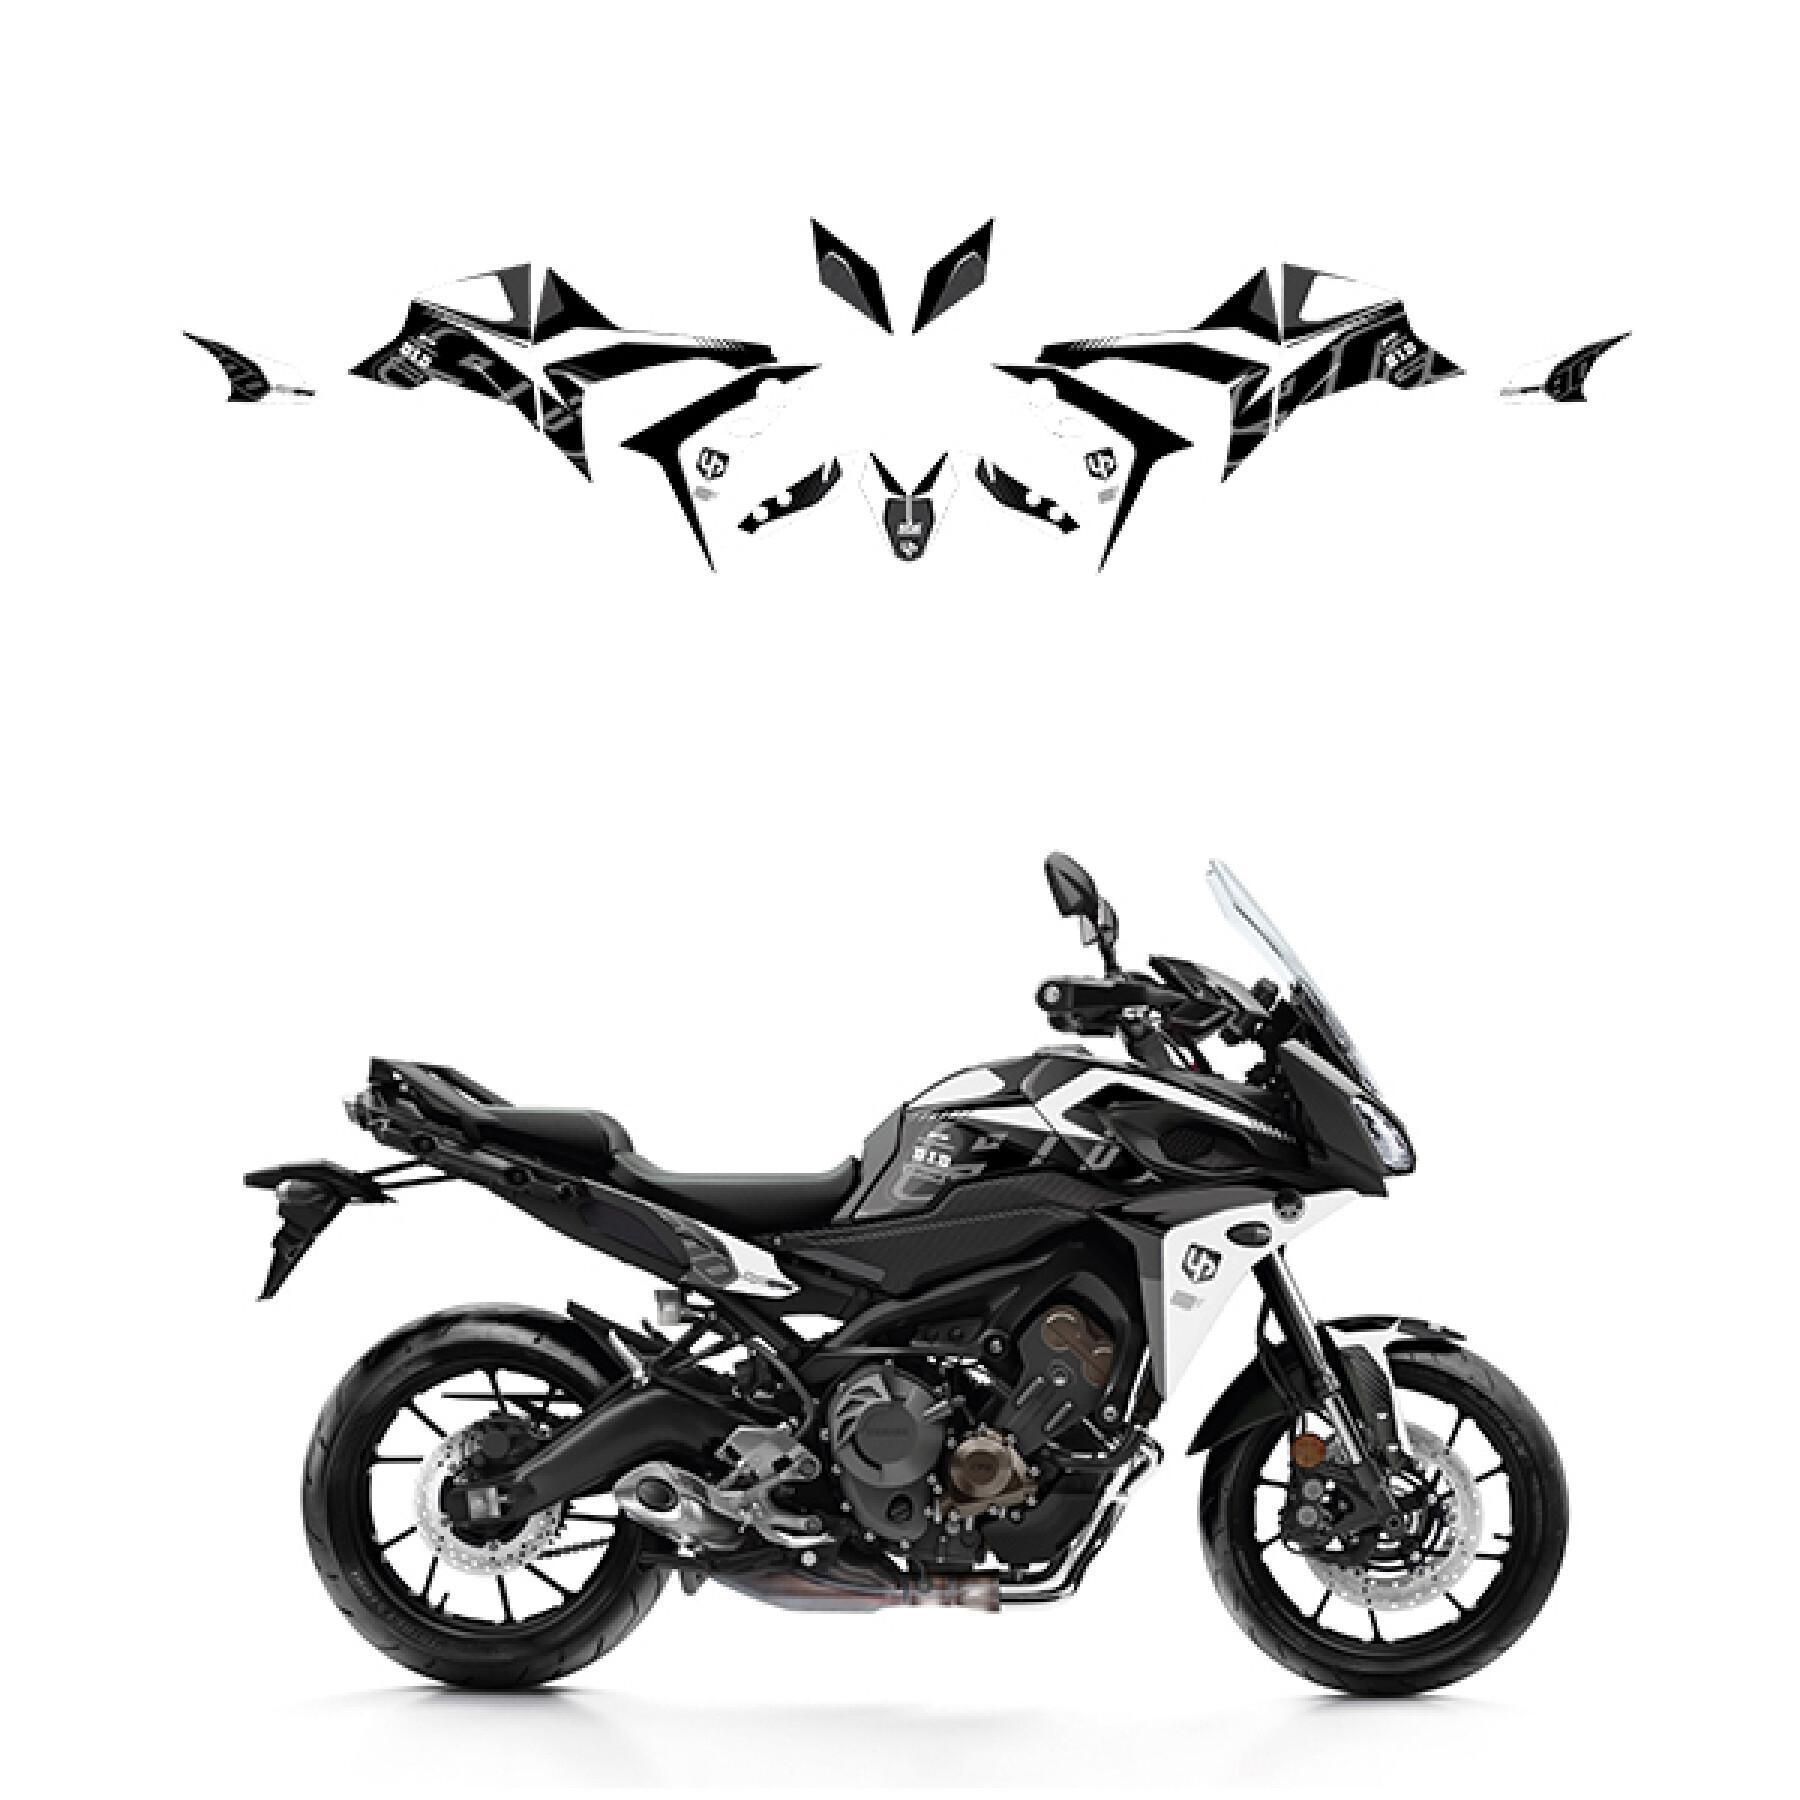 Trailbike stickers Up maximize yamaha tracer900 2015-2018